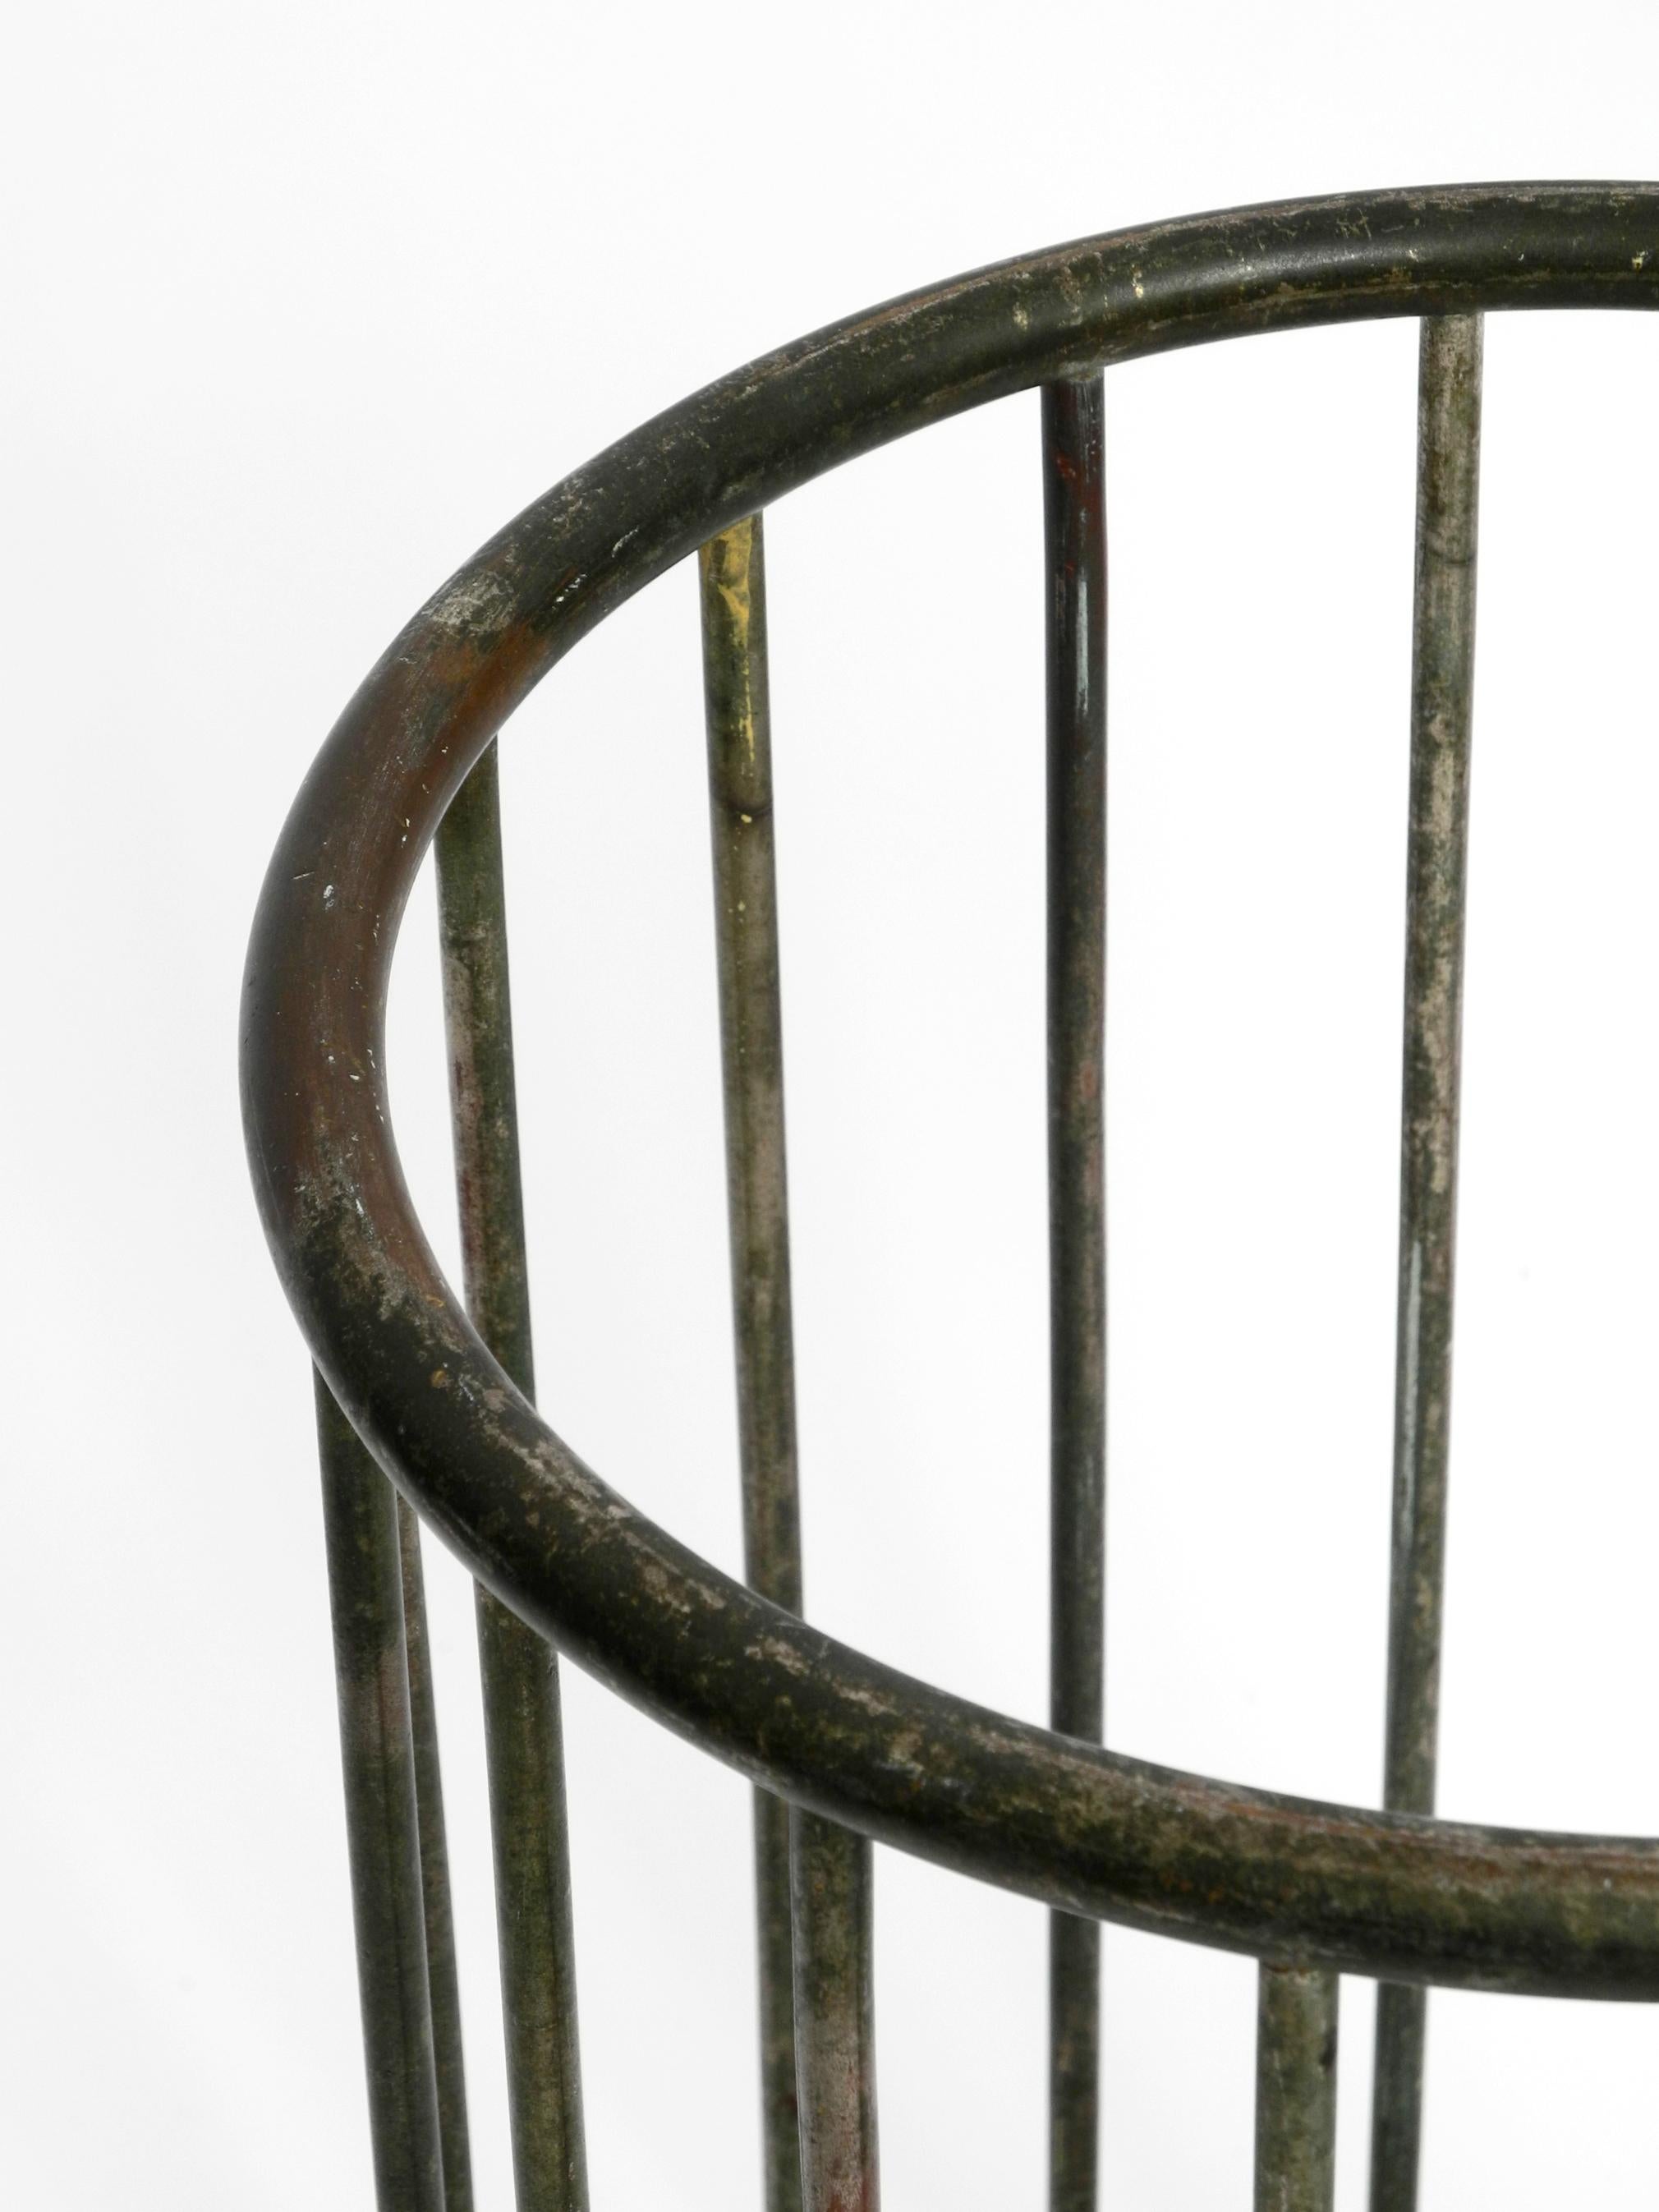 Original Mott's Plumbing Towel Basket Made of Nickel-Plated Brass from the 1910s 3